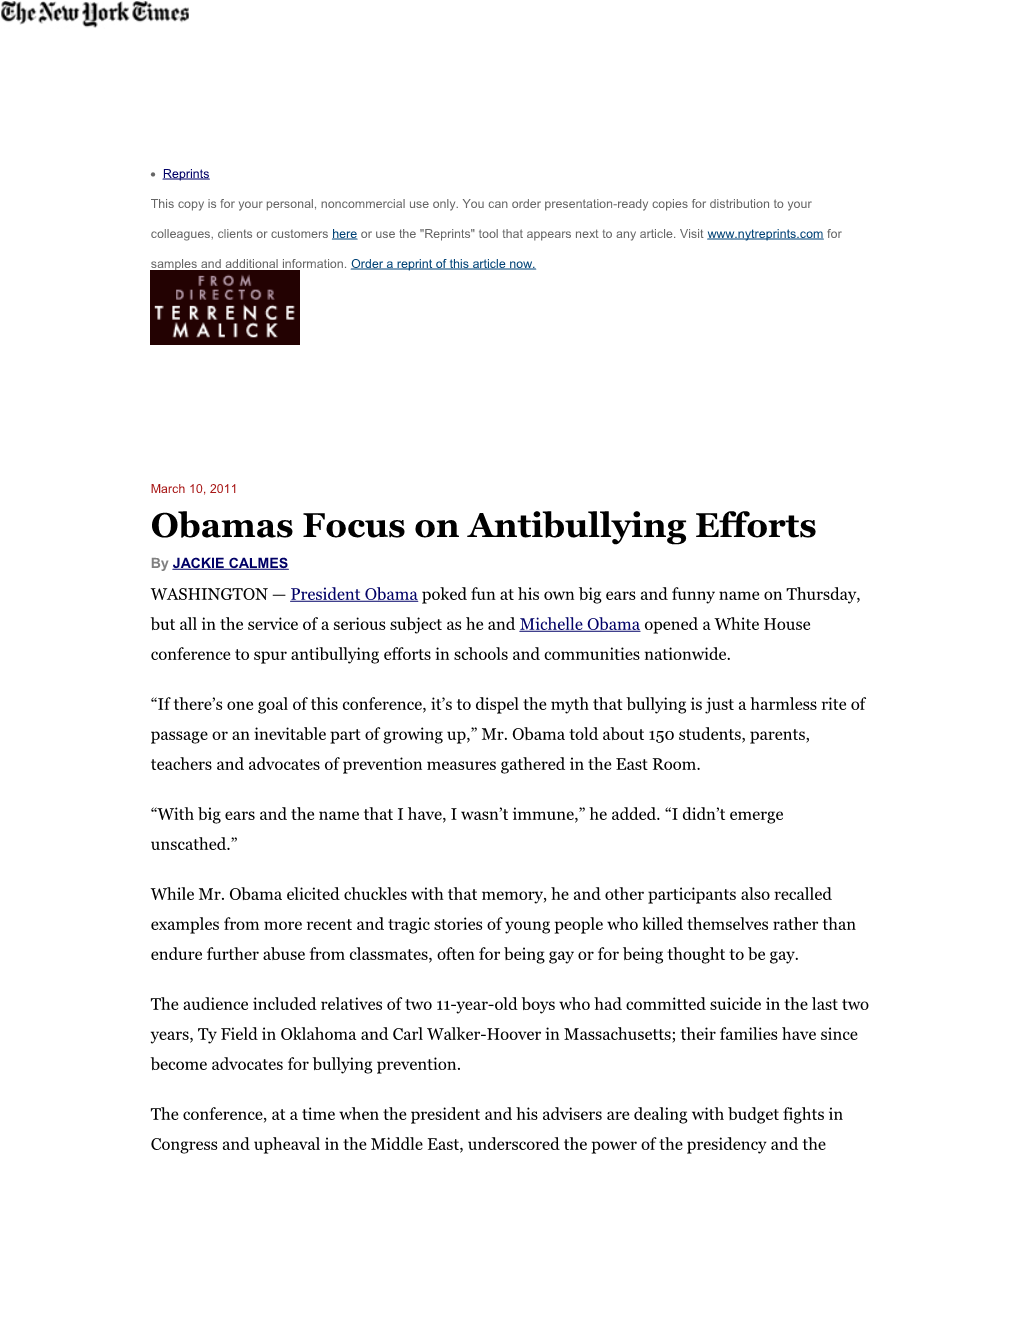 Obamas Focus on Antibullying Efforts